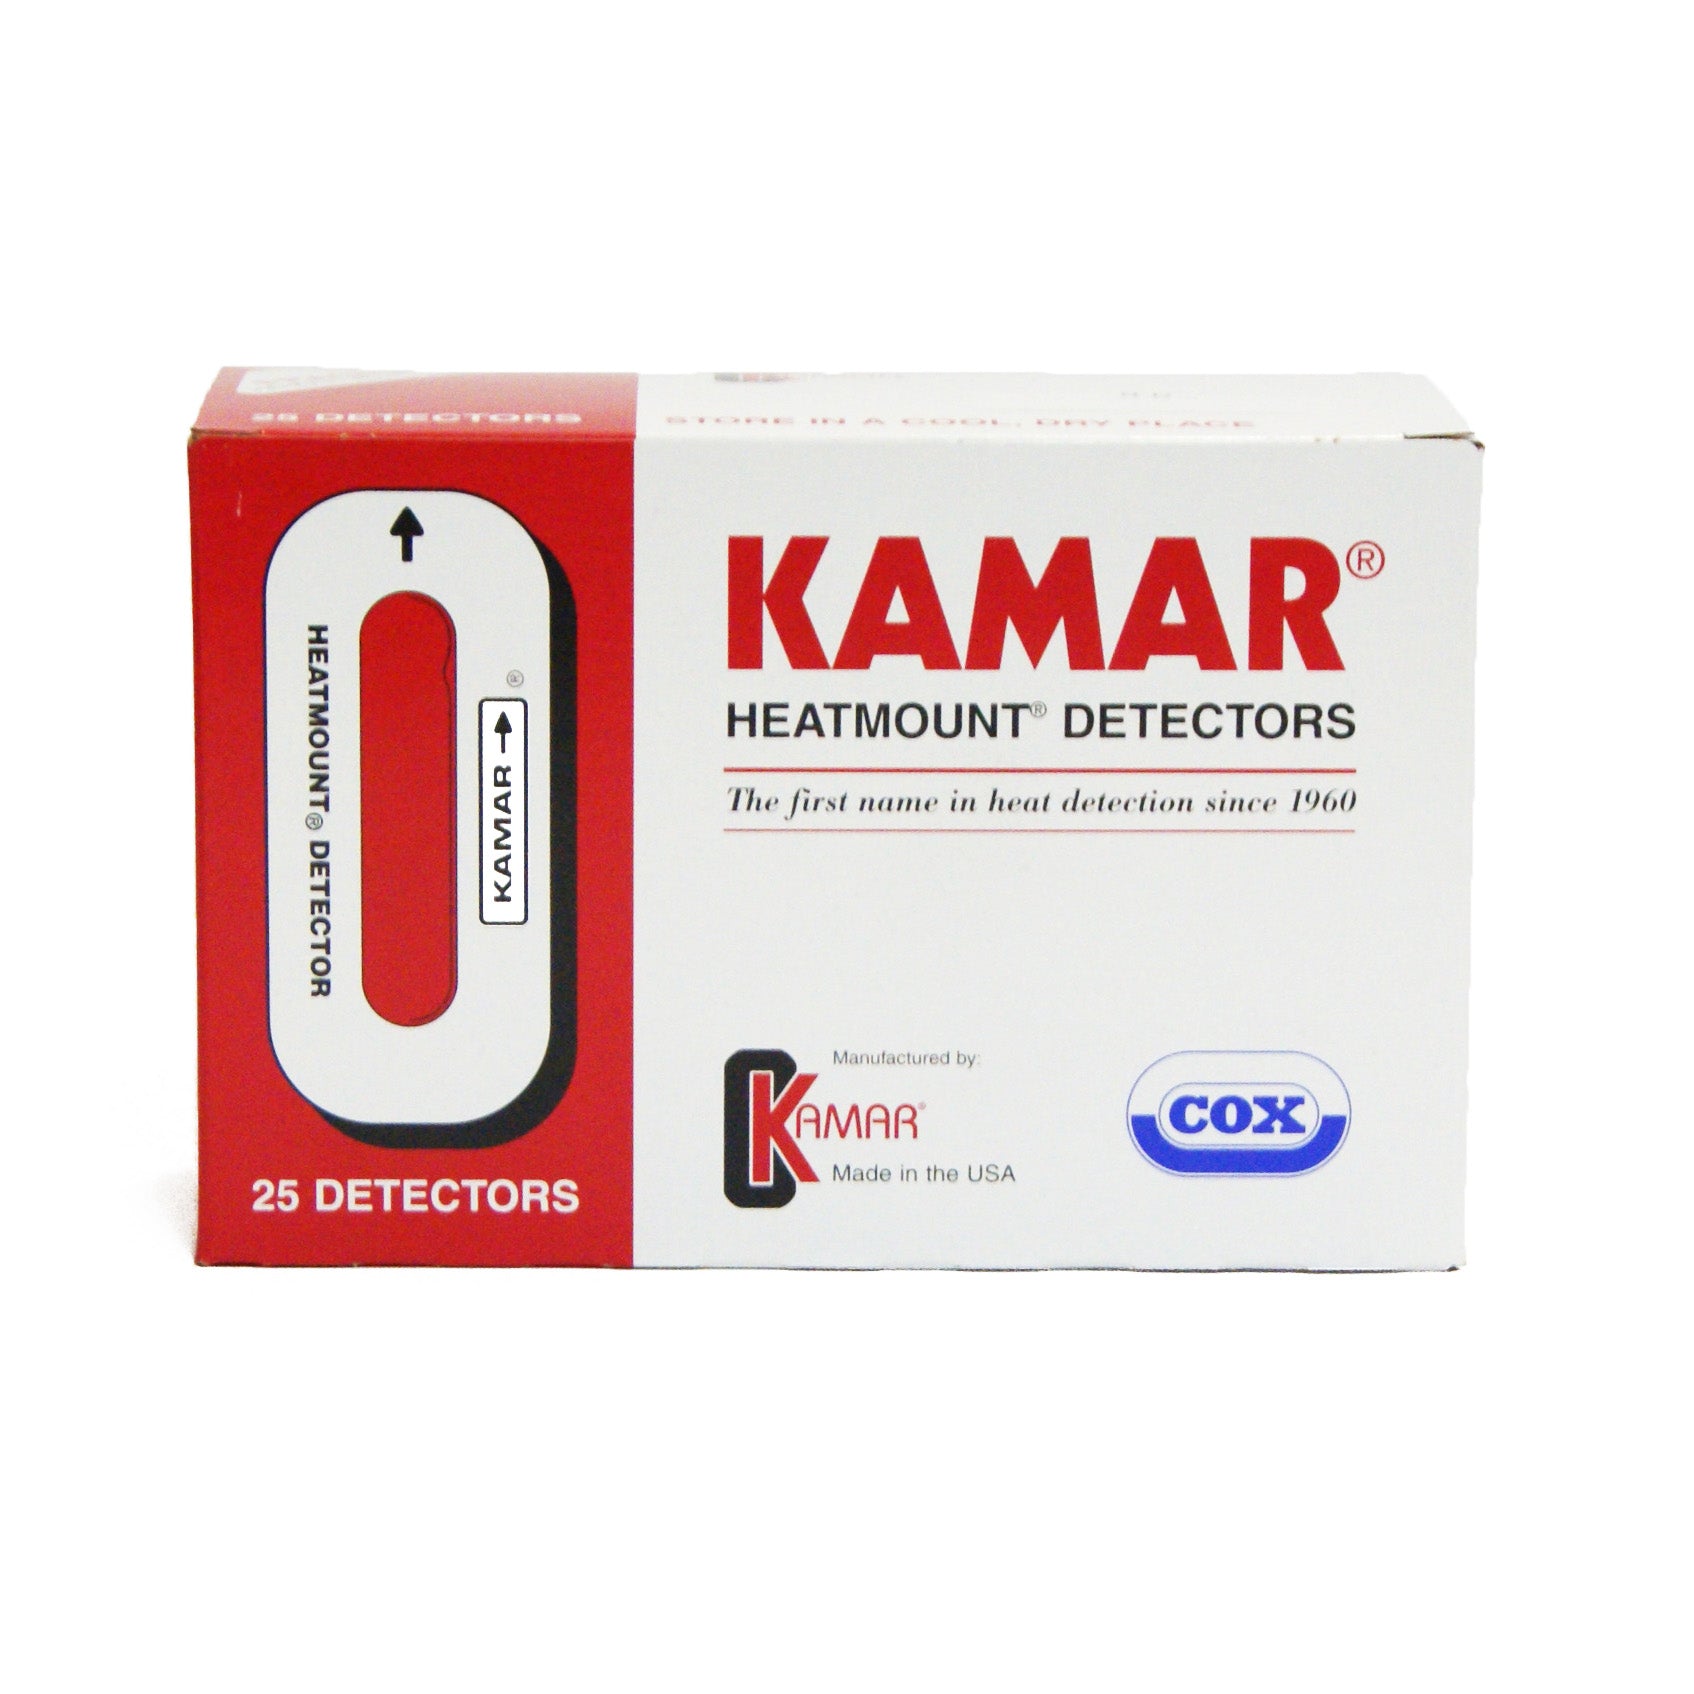 Kamar Heat Detectors